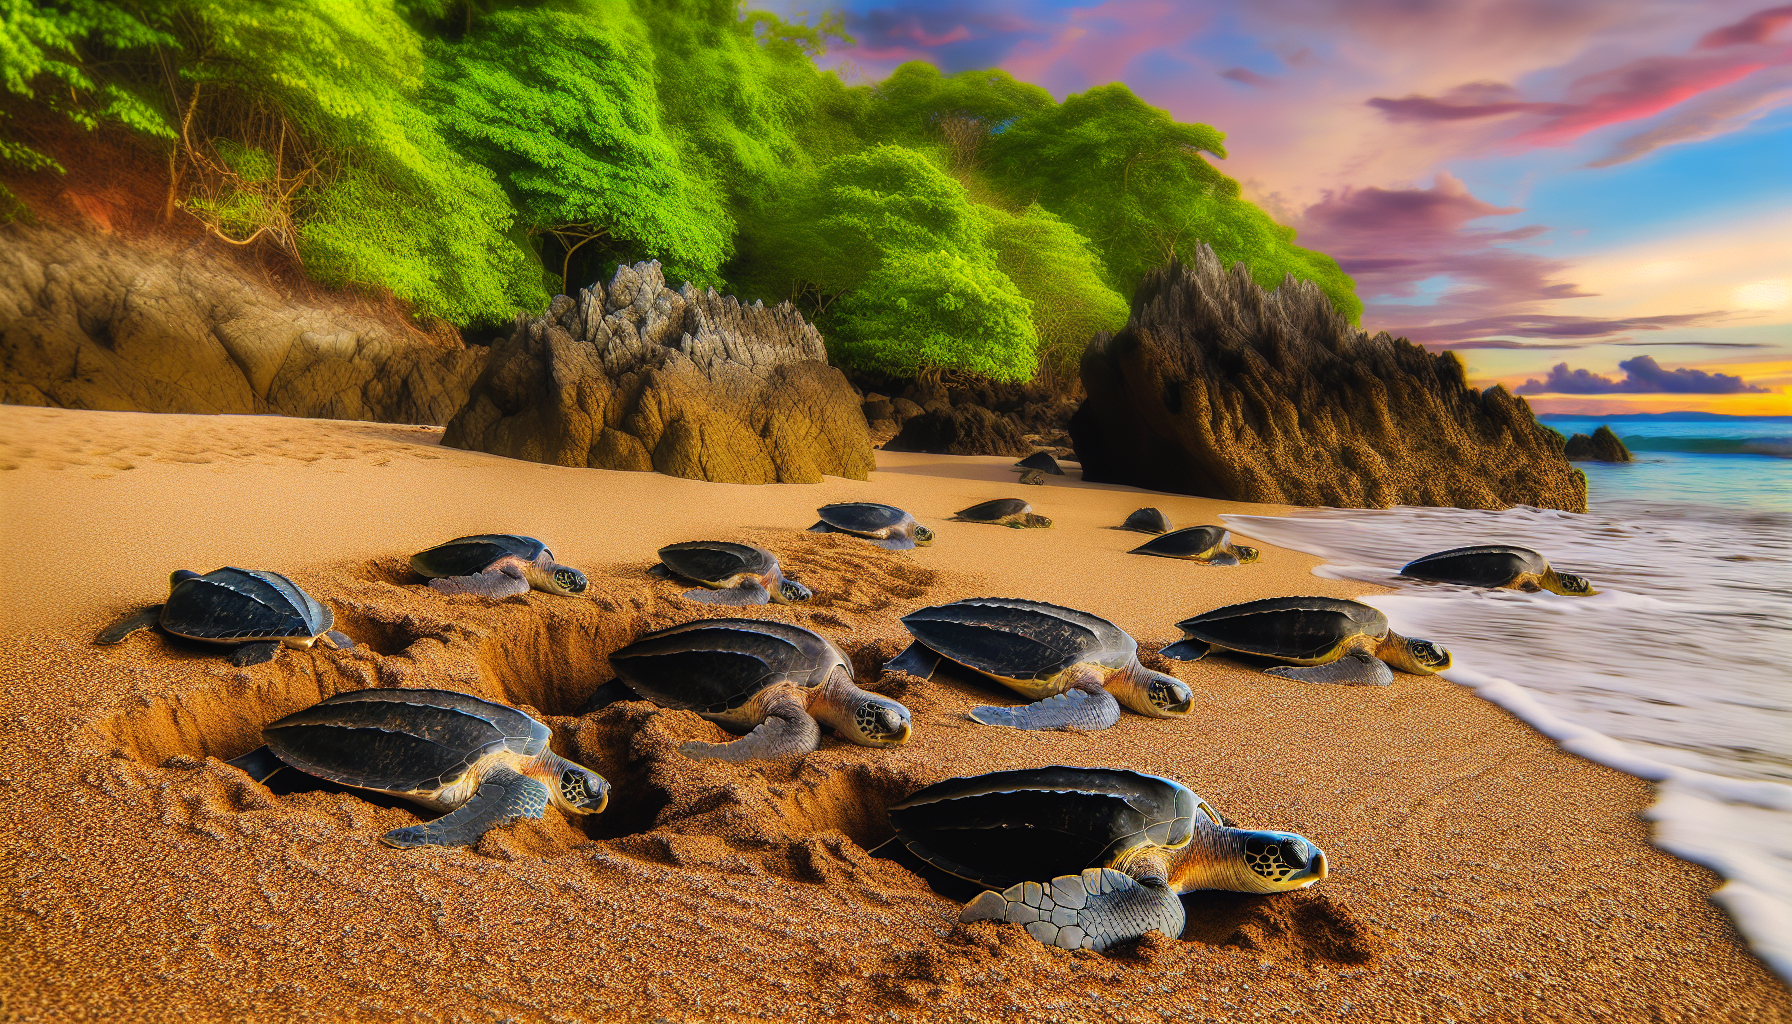 Nesting leatherback turtles on the beach in Playa Langosta